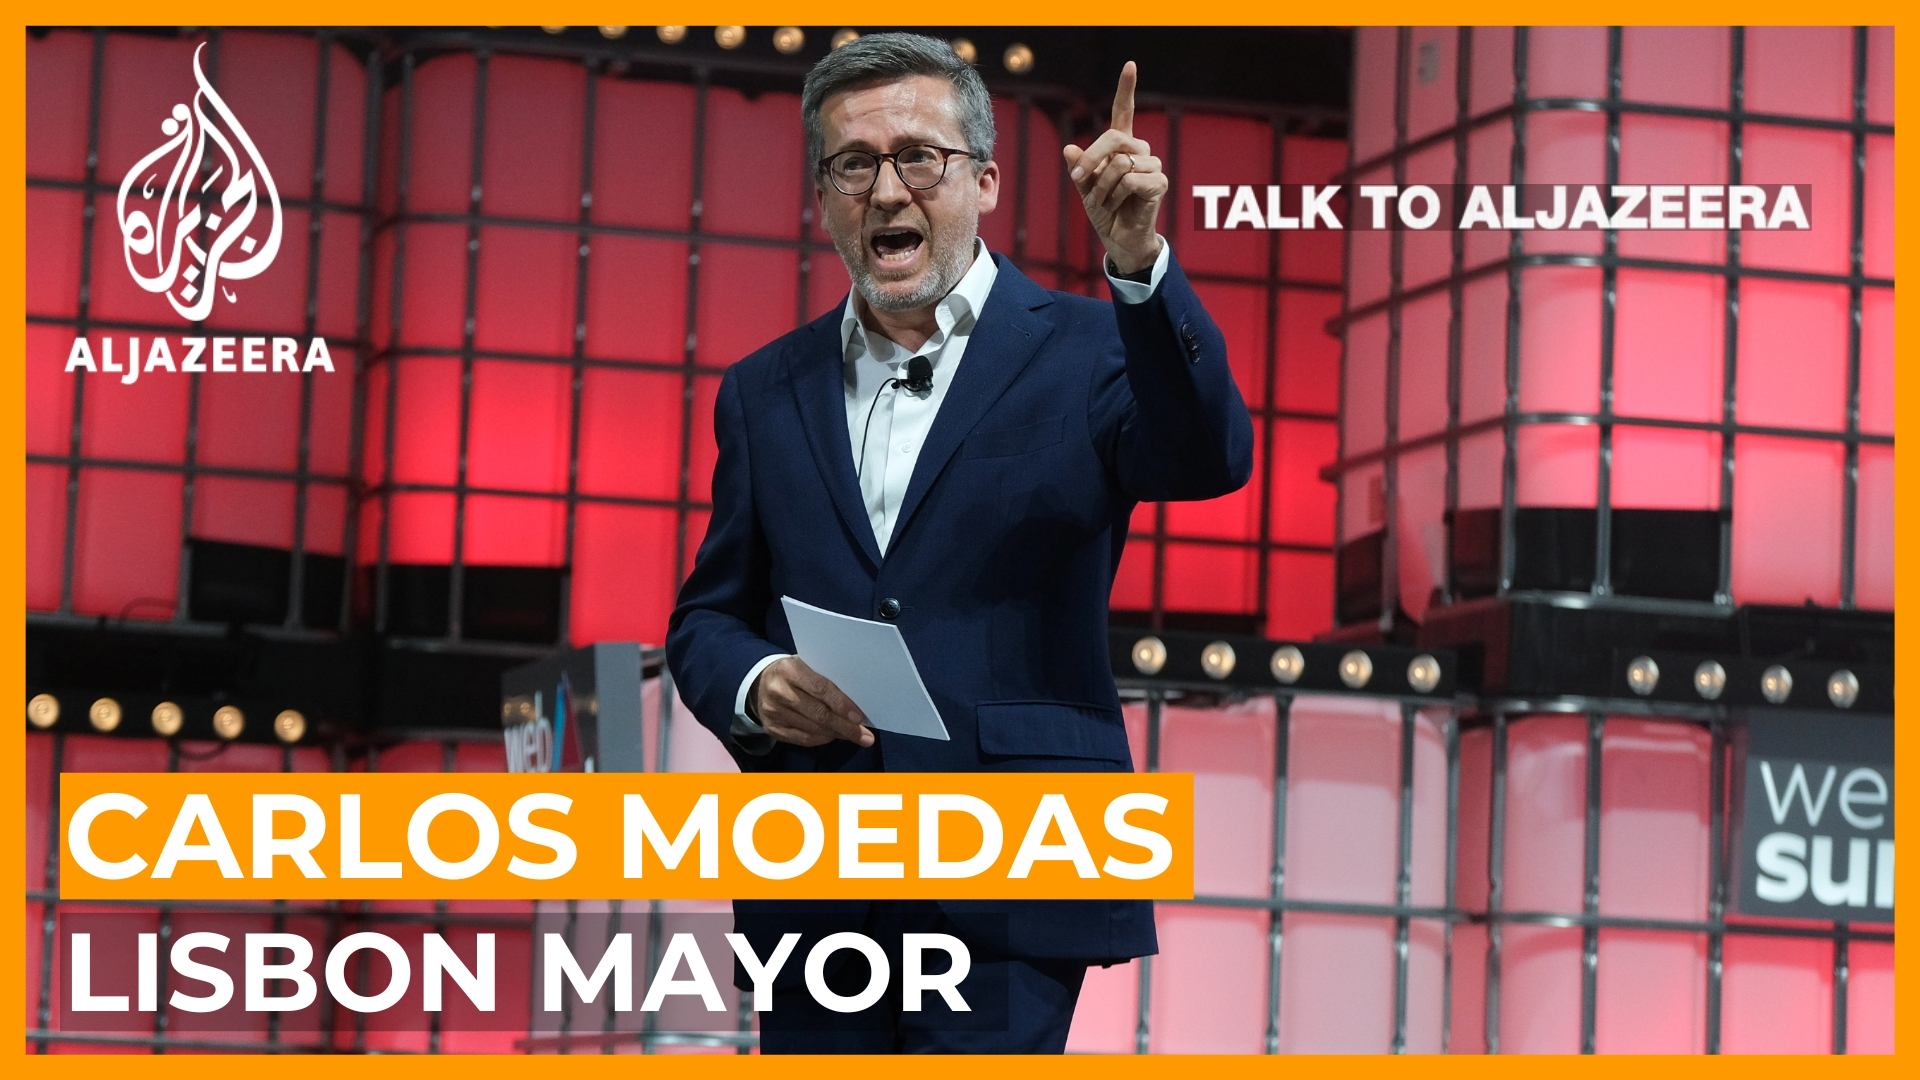 Lisbon's Mayor Moedas: Leading the city’s rise as global innovation hub | Talk to Al Jazeera